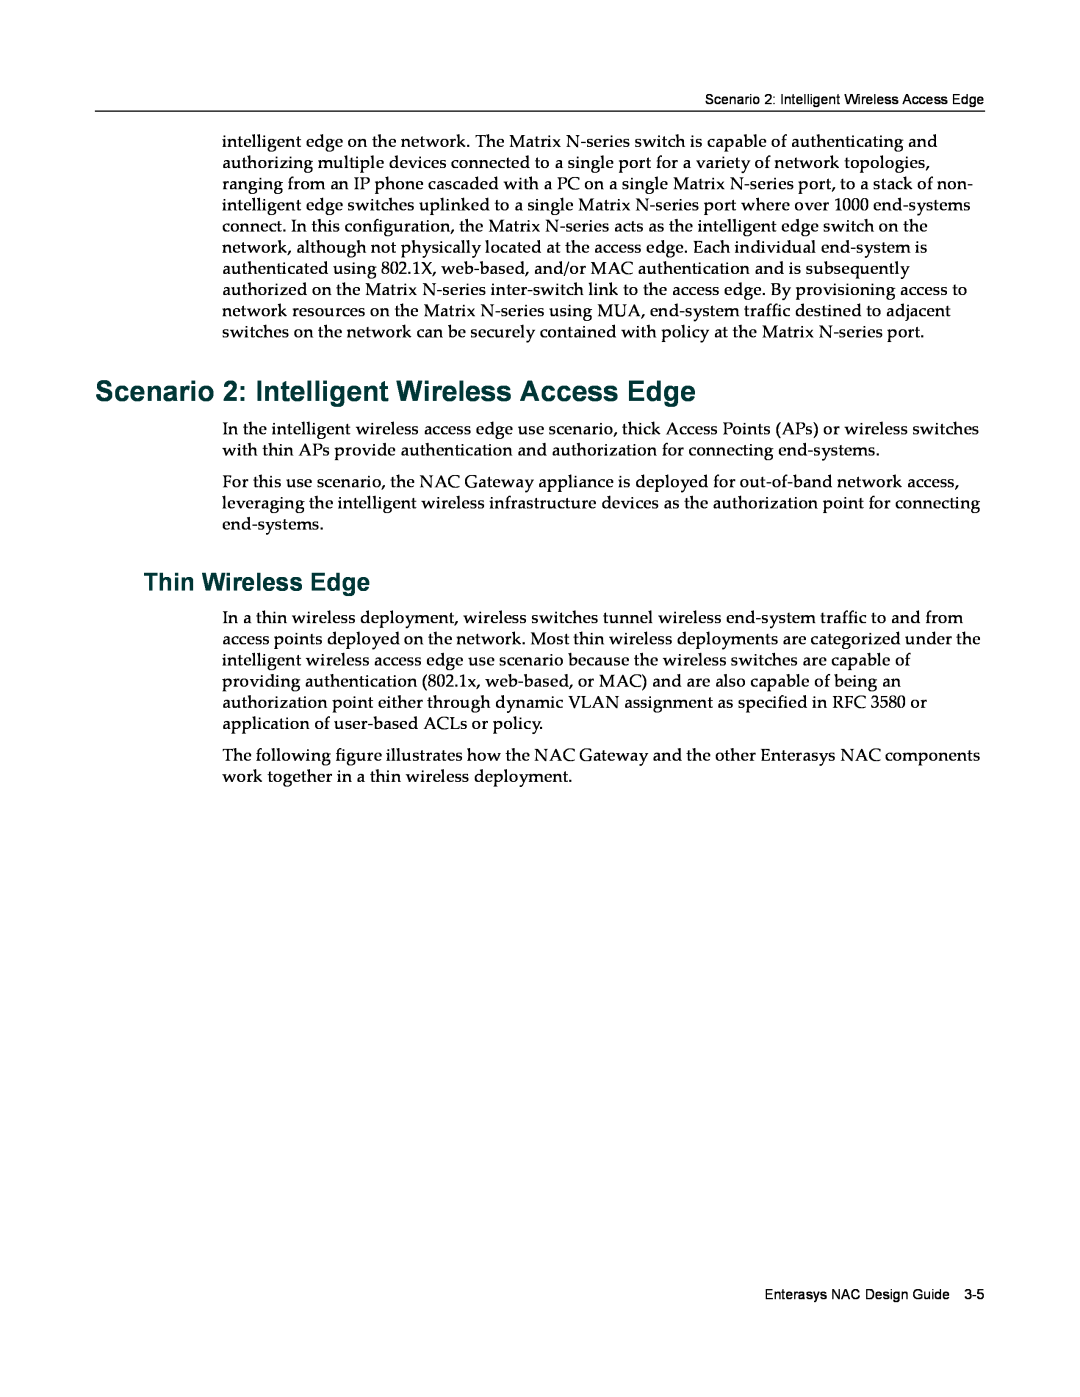 Enterasys Networks 9034385 manual Scenario 2 Intelligent Wireless Access Edge, Thin Wireless Edge 